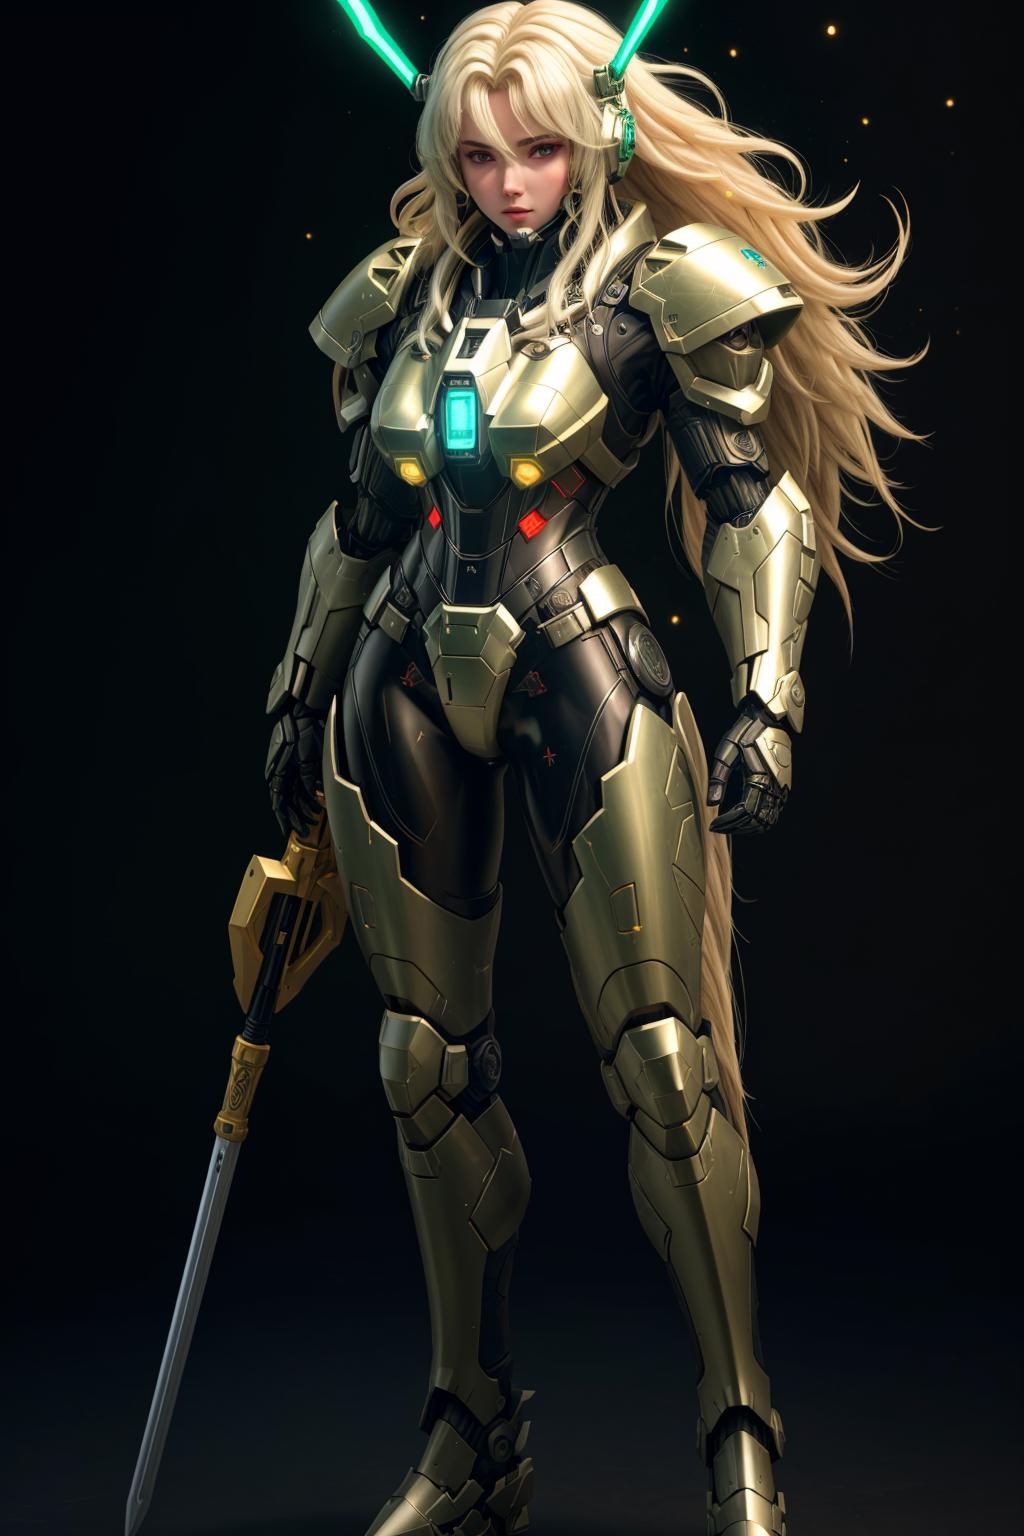 Halo Armor Likeness image by EDG